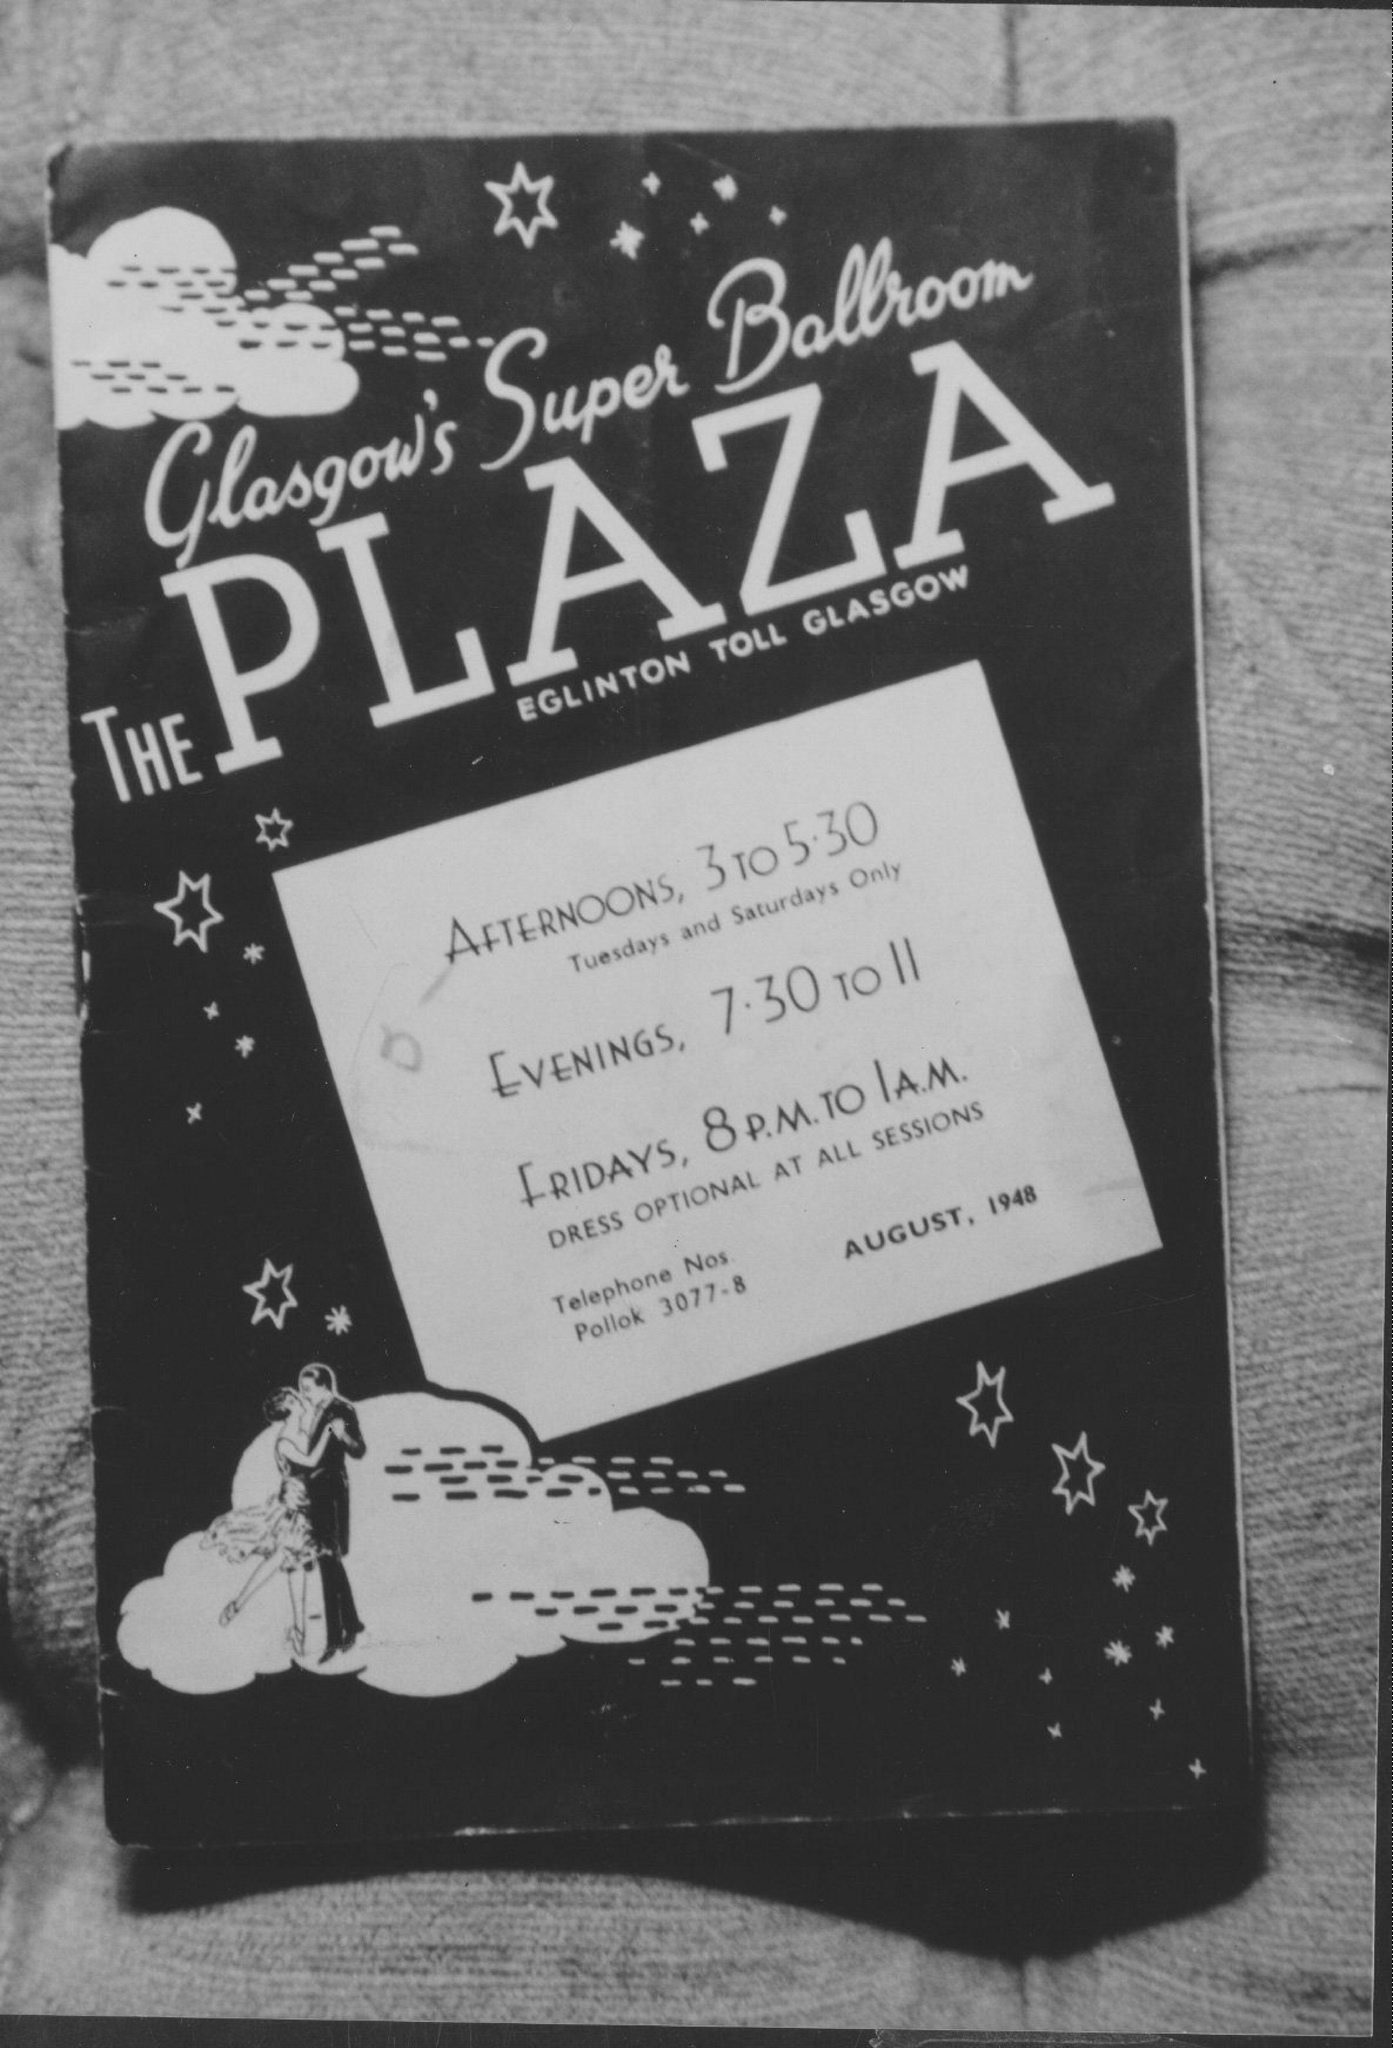 A leaflet advertising Glasgows super ballroom, The Plaza.